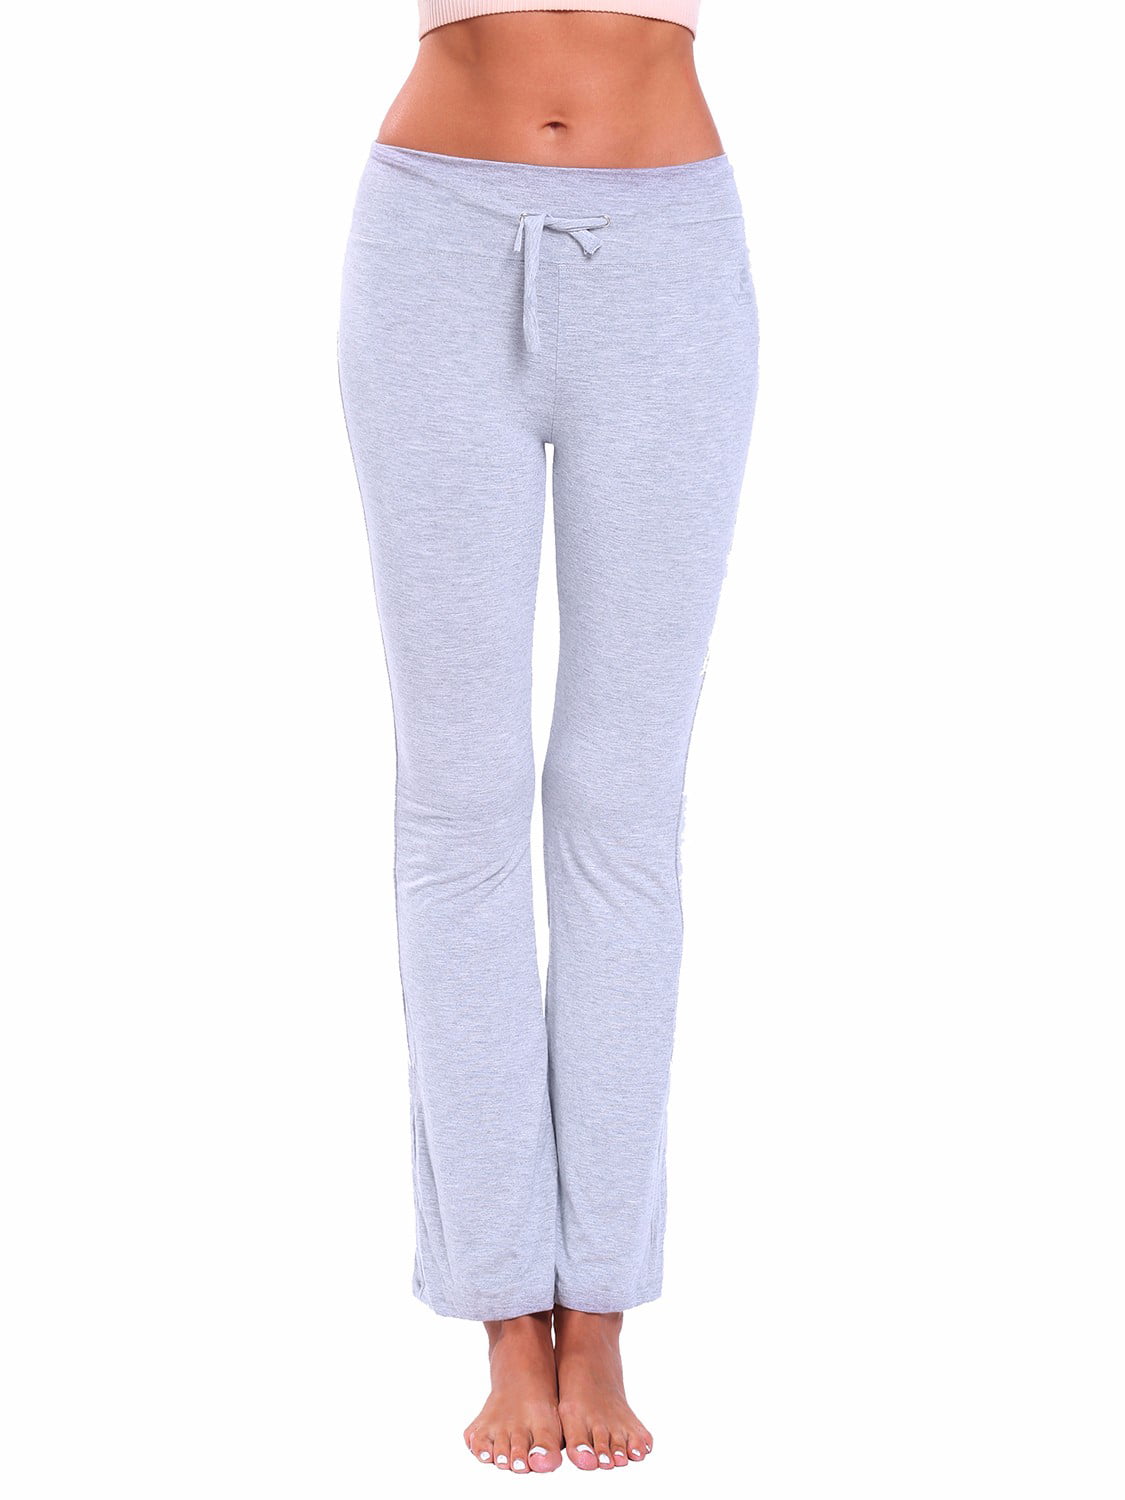 CROSS1946 Activewear Women's Bootleg Yoga Pants, Super Soft Modal Comfy ...